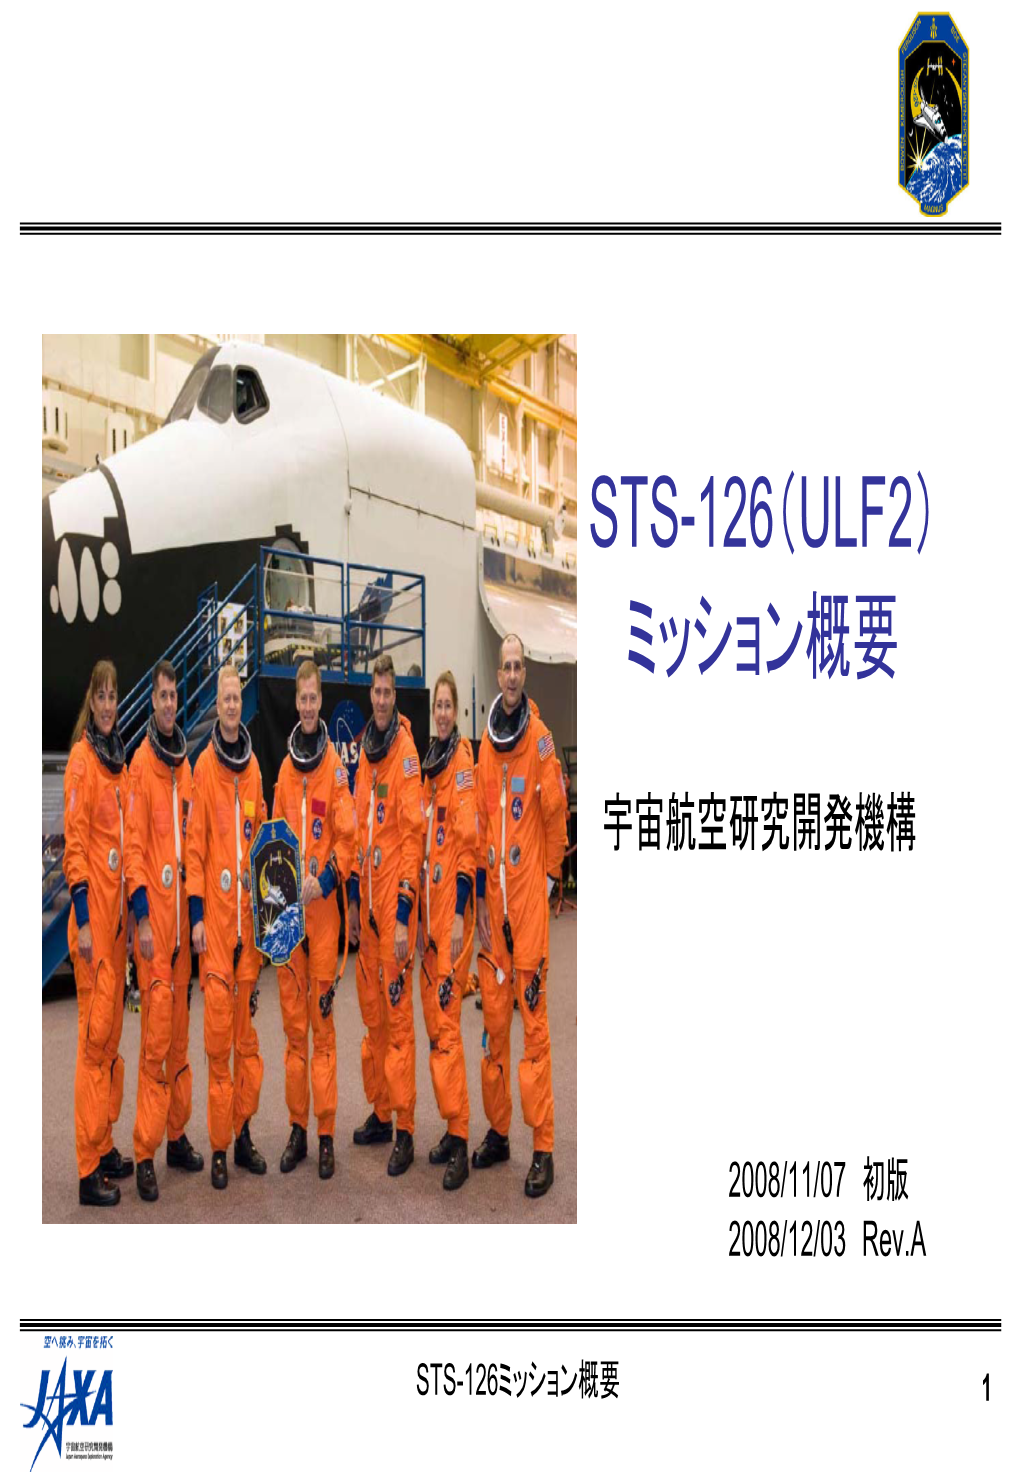 Sts-126（Ulf2） ミッション概要